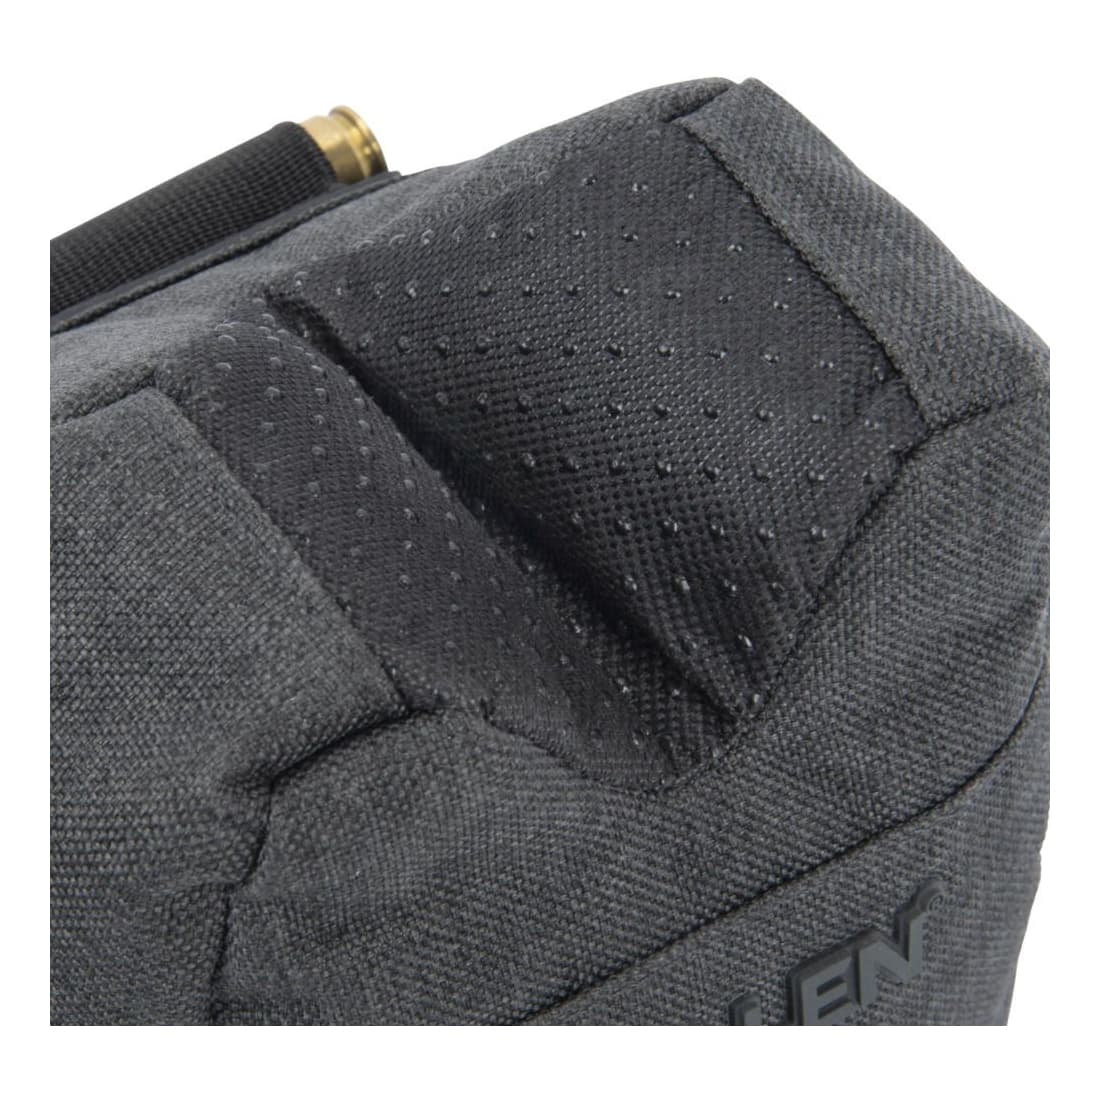 Allen® Front and Rear Filled Premium Shooting Bag Set